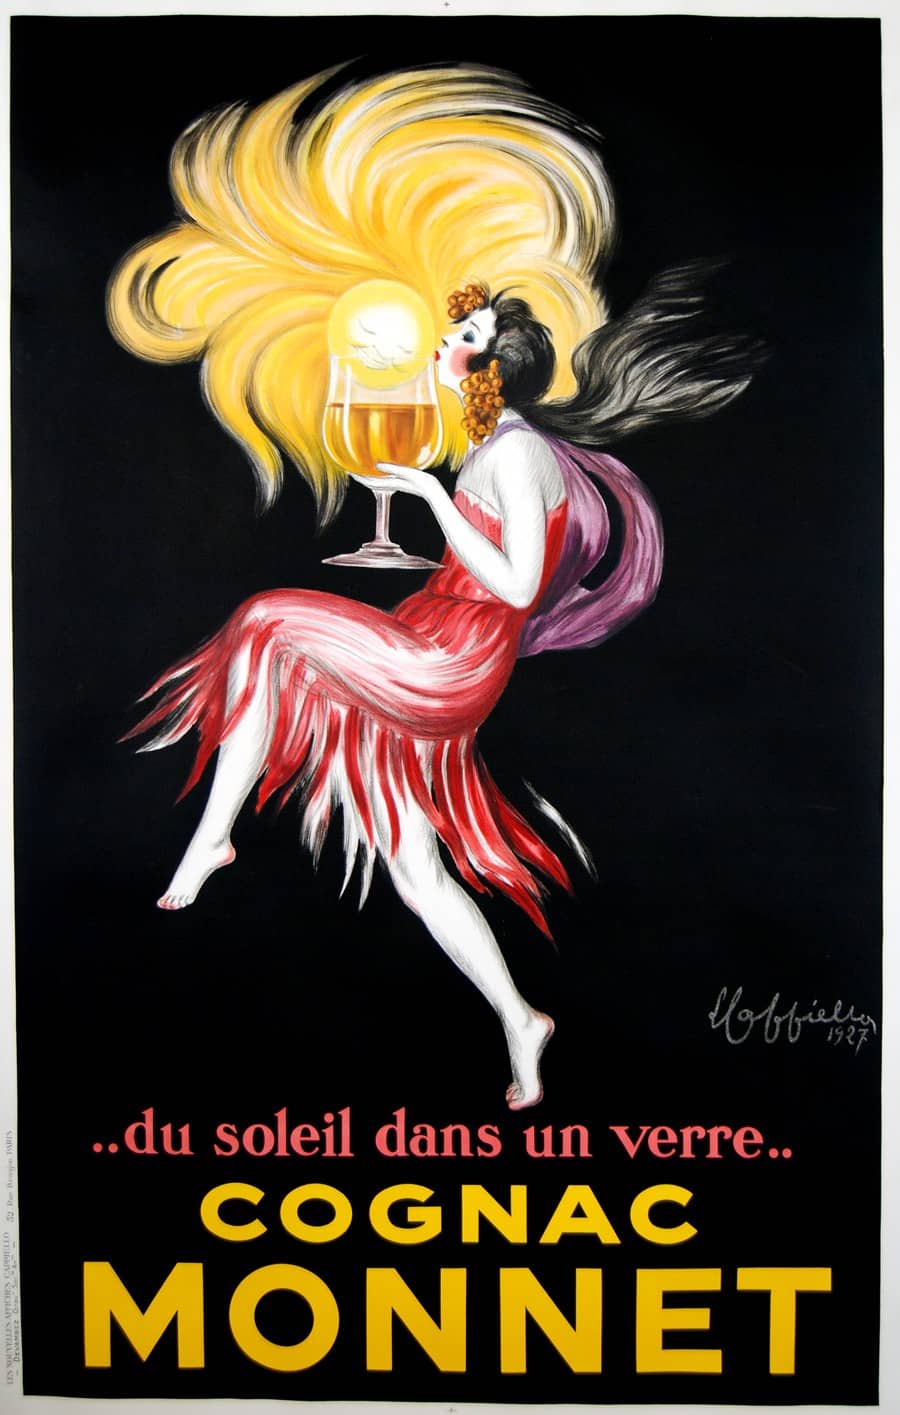 Original Vintage Cognac Monnet Poster by Leonetto Cappiello Printed in 1927